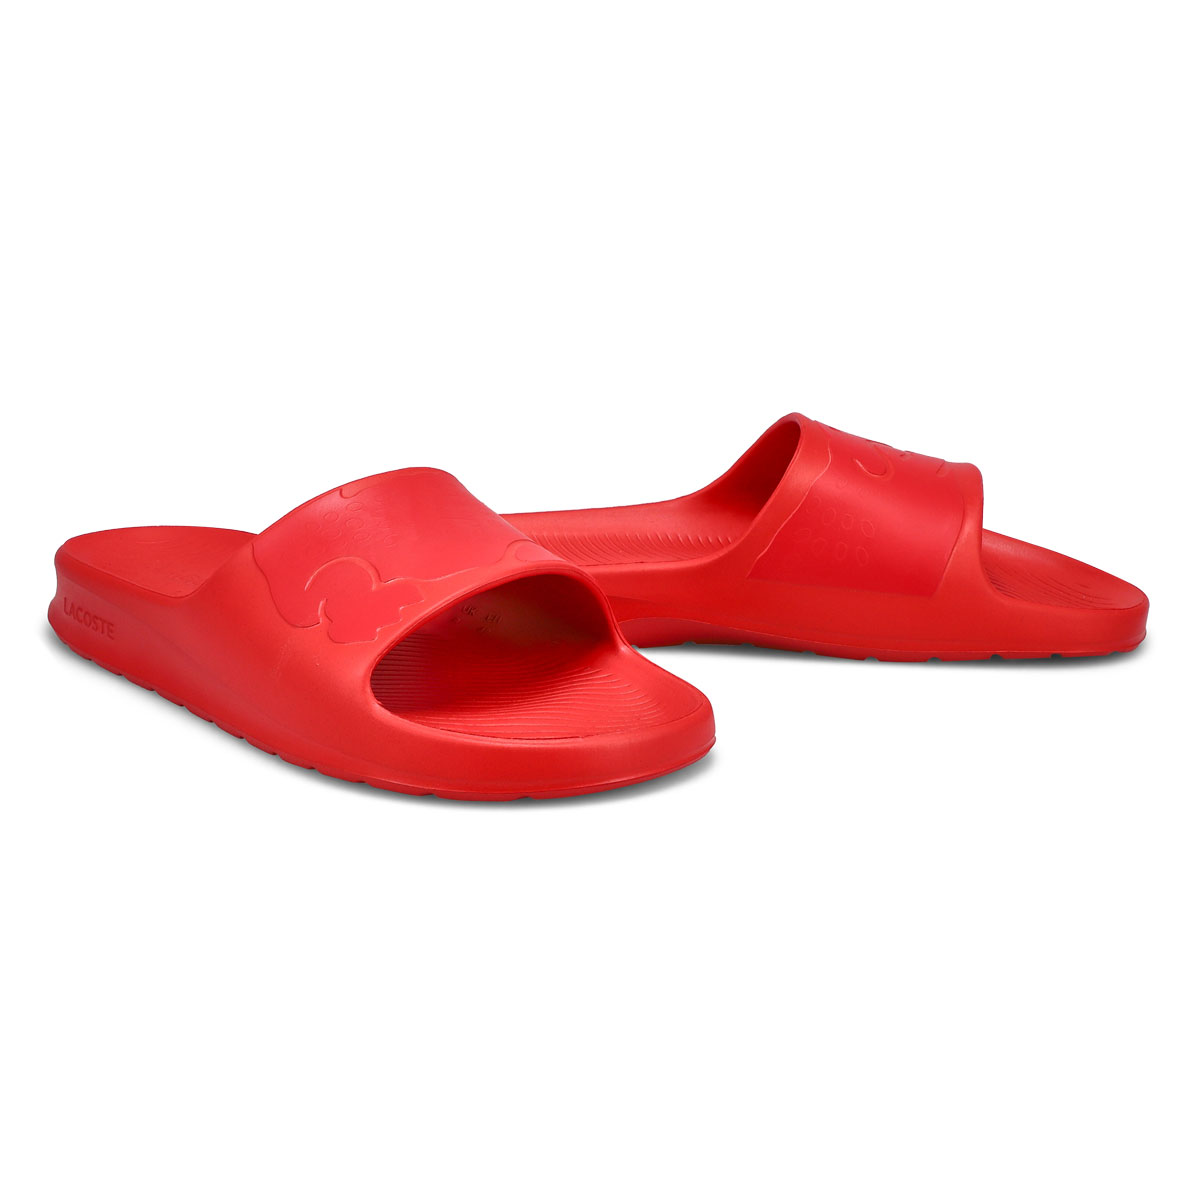 Men's Croco 2.0 Slide Sandal - Red/Red